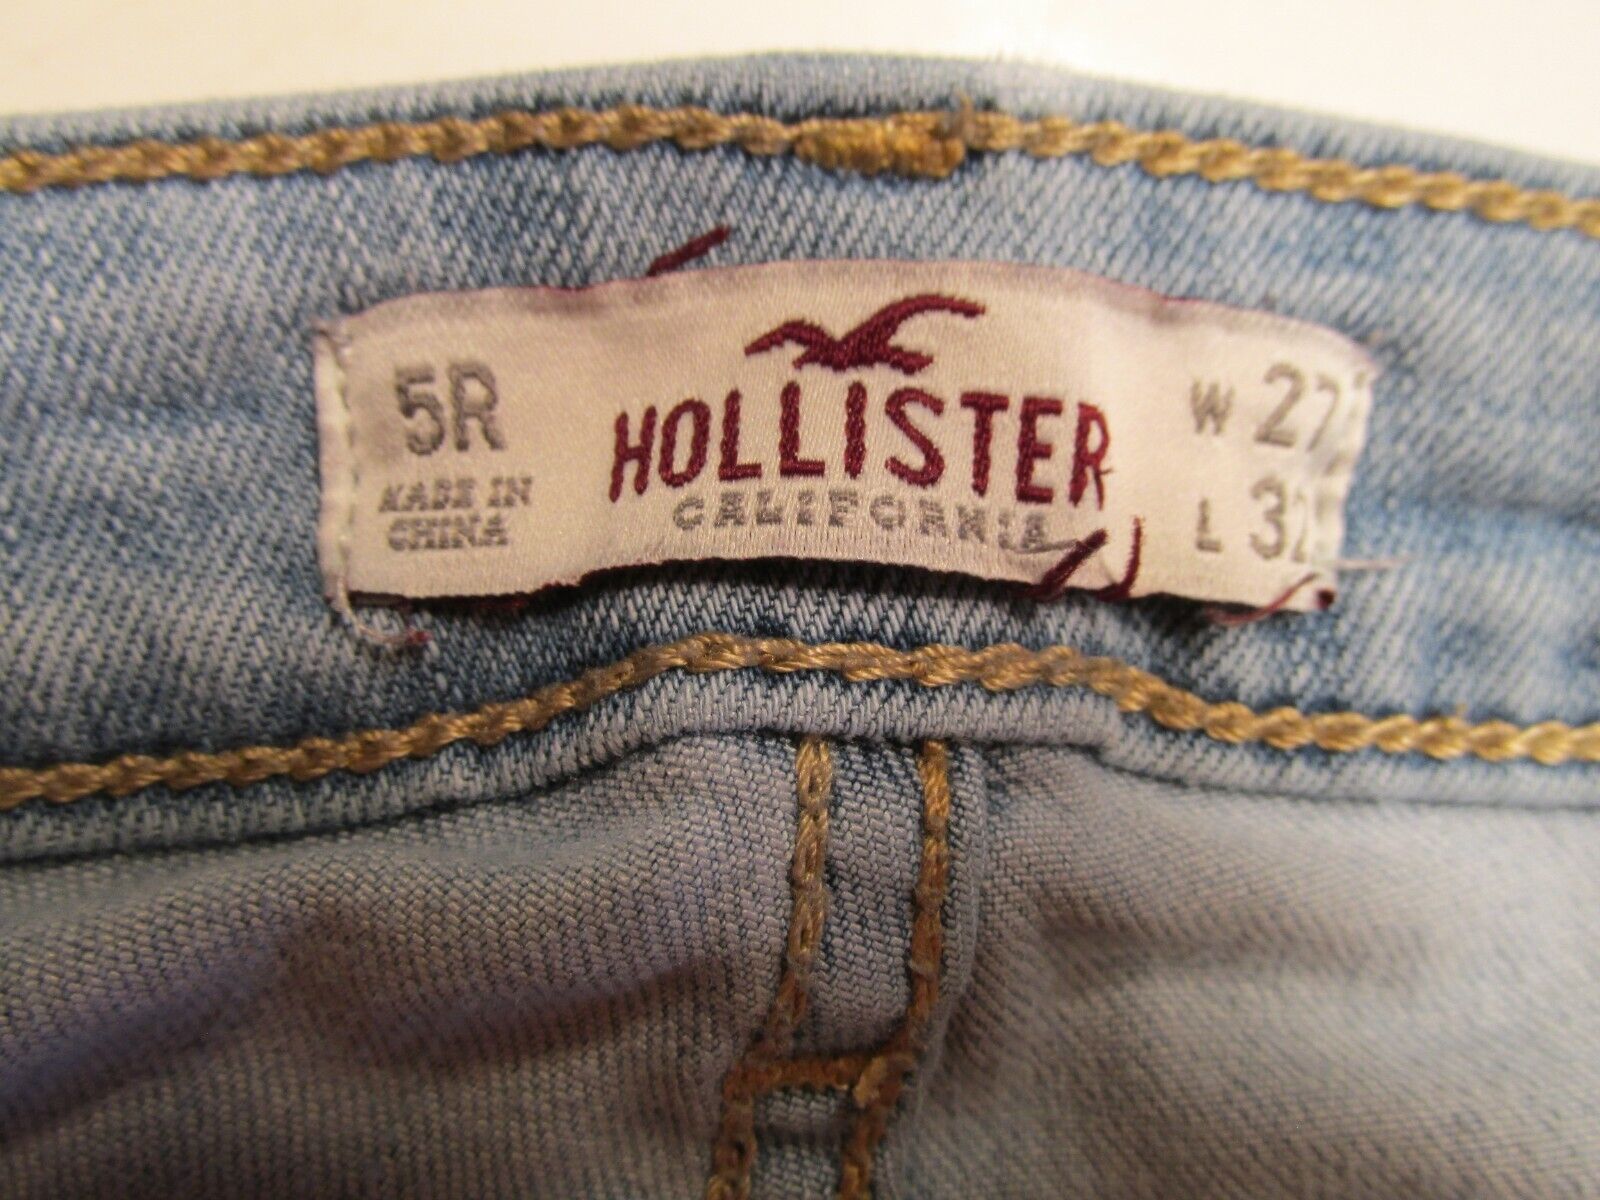 HOLLISTER Skinny Jeans Women SZ 5R 27x32 Low Rise… - image 5